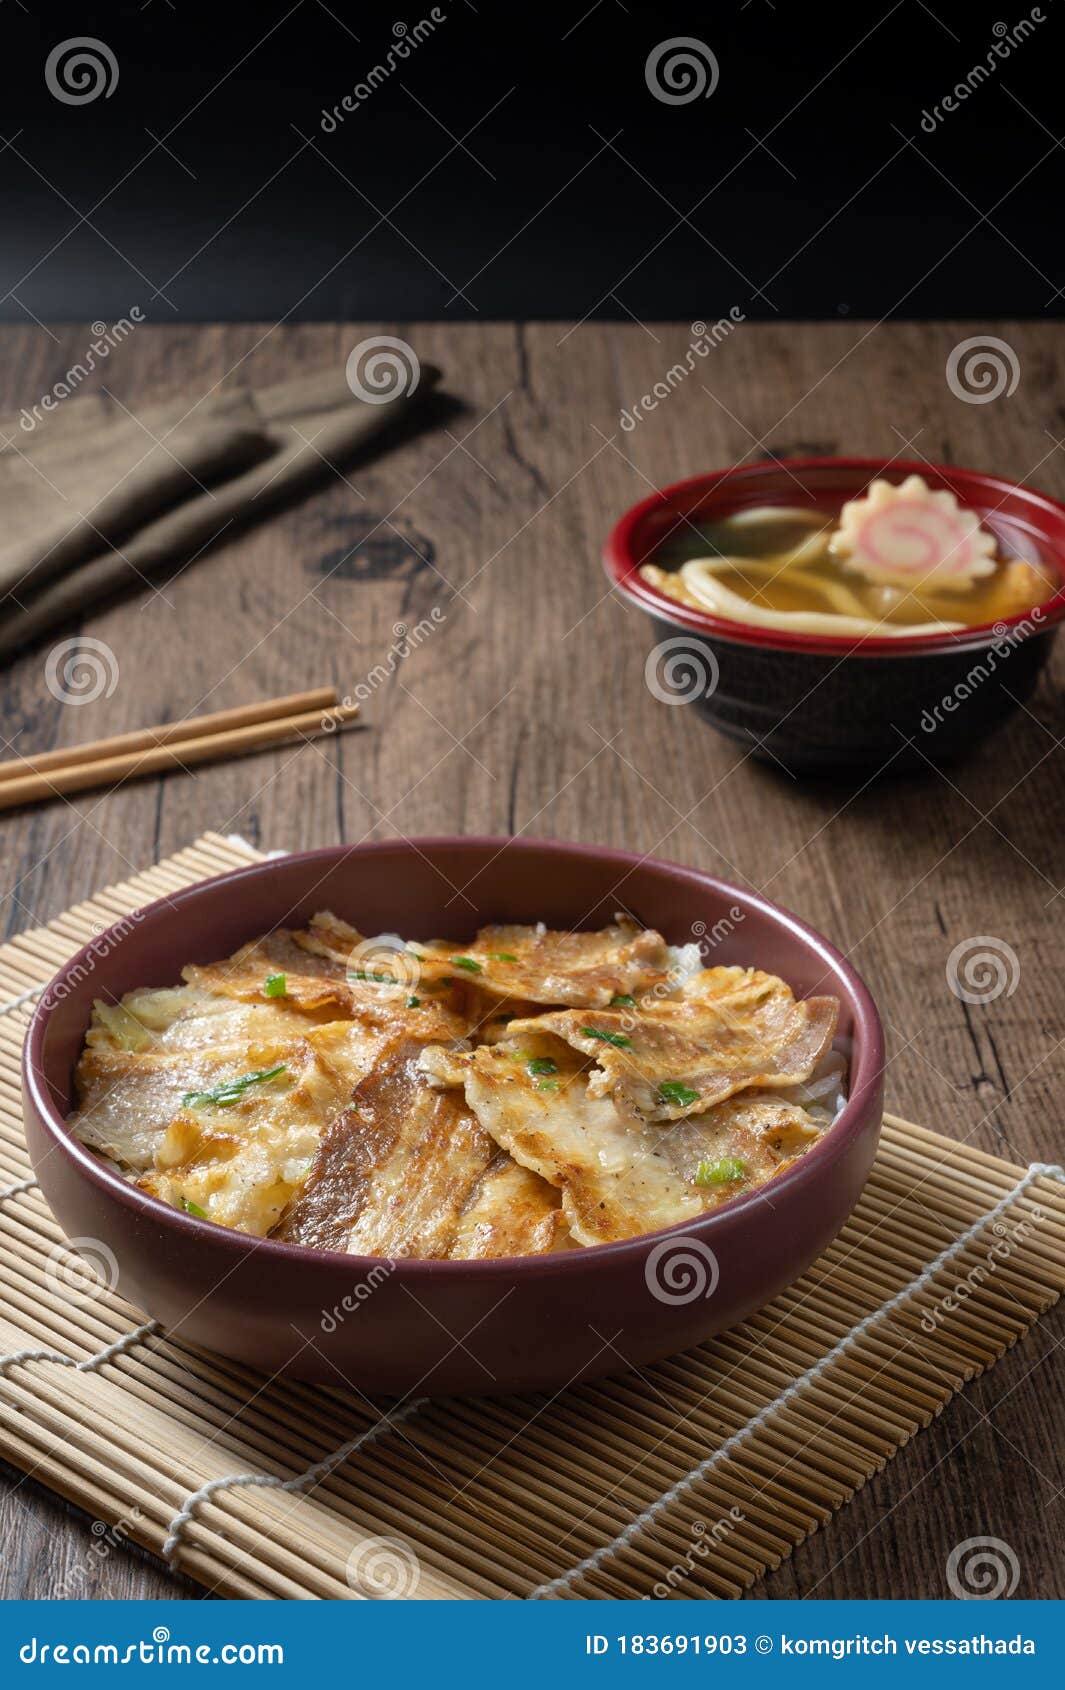 https://thumbs.dreamstime.com/z/butadon-japanese-rice-bowl-dish-consisting-bowl-rice-topped-pork-belly-simmered-butadon-japanese-rice-bowl-dish-183691903.jpg